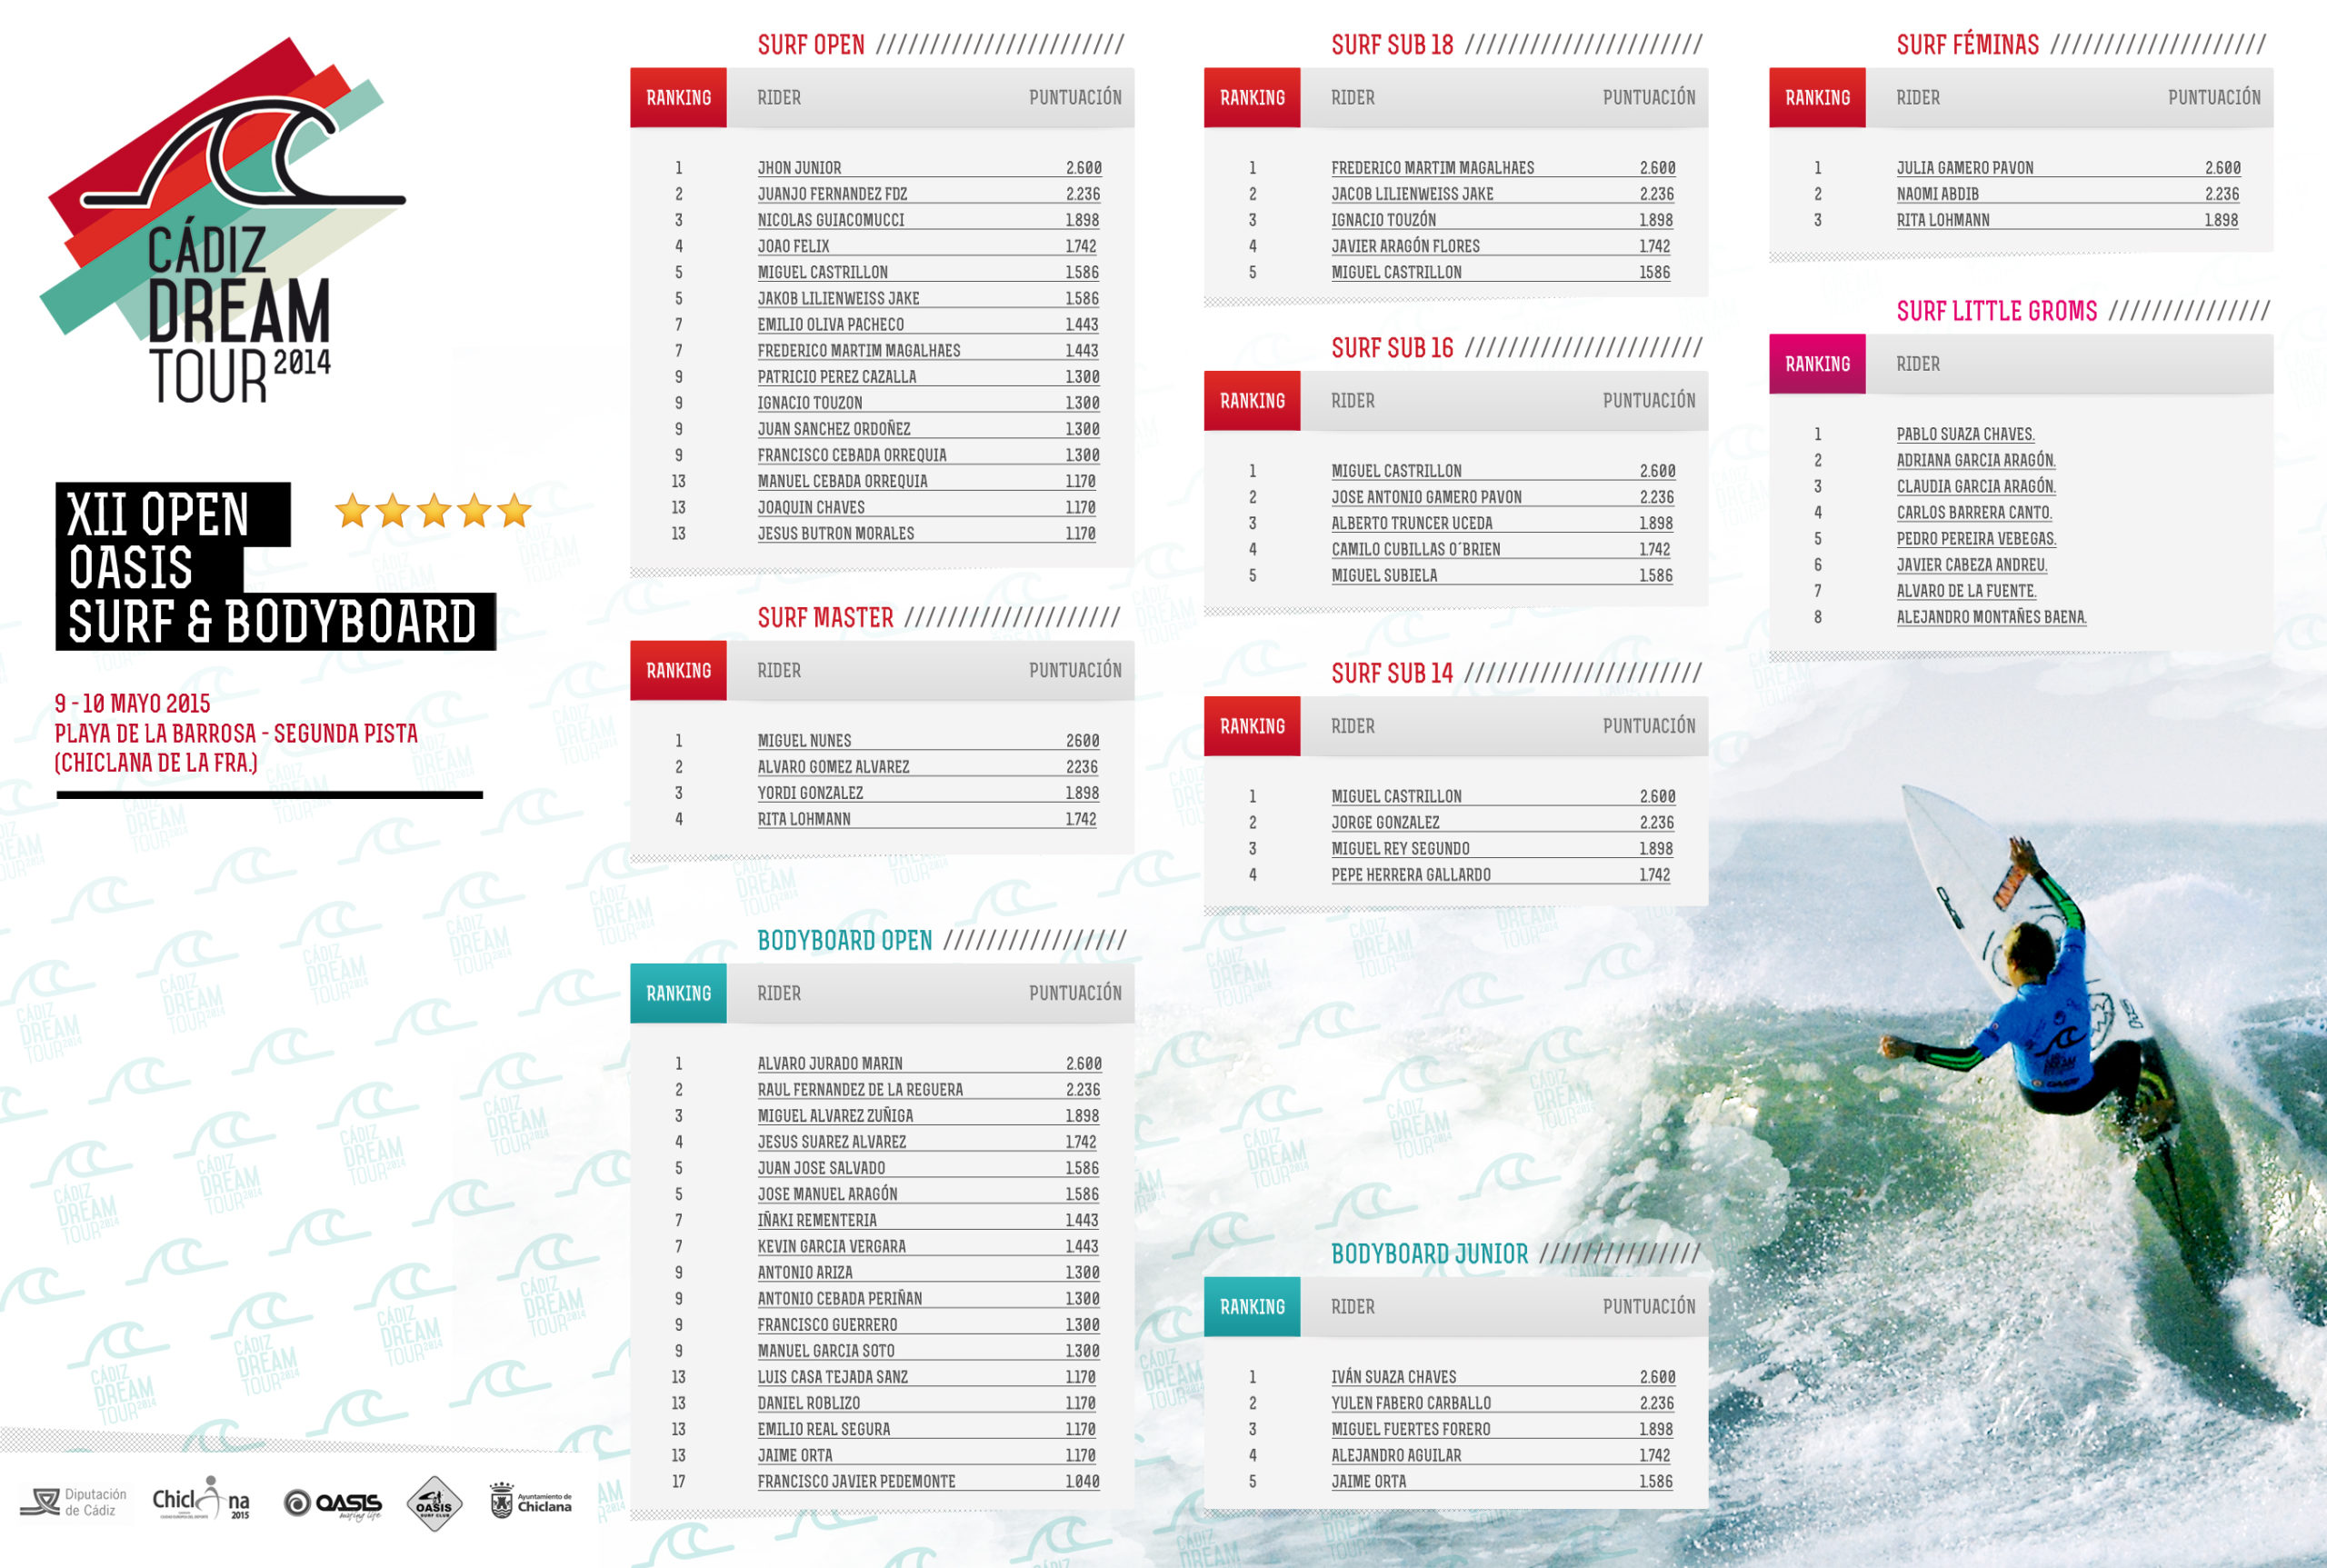 Ranking XII Open Oasis Surf and Bodyboard bilde